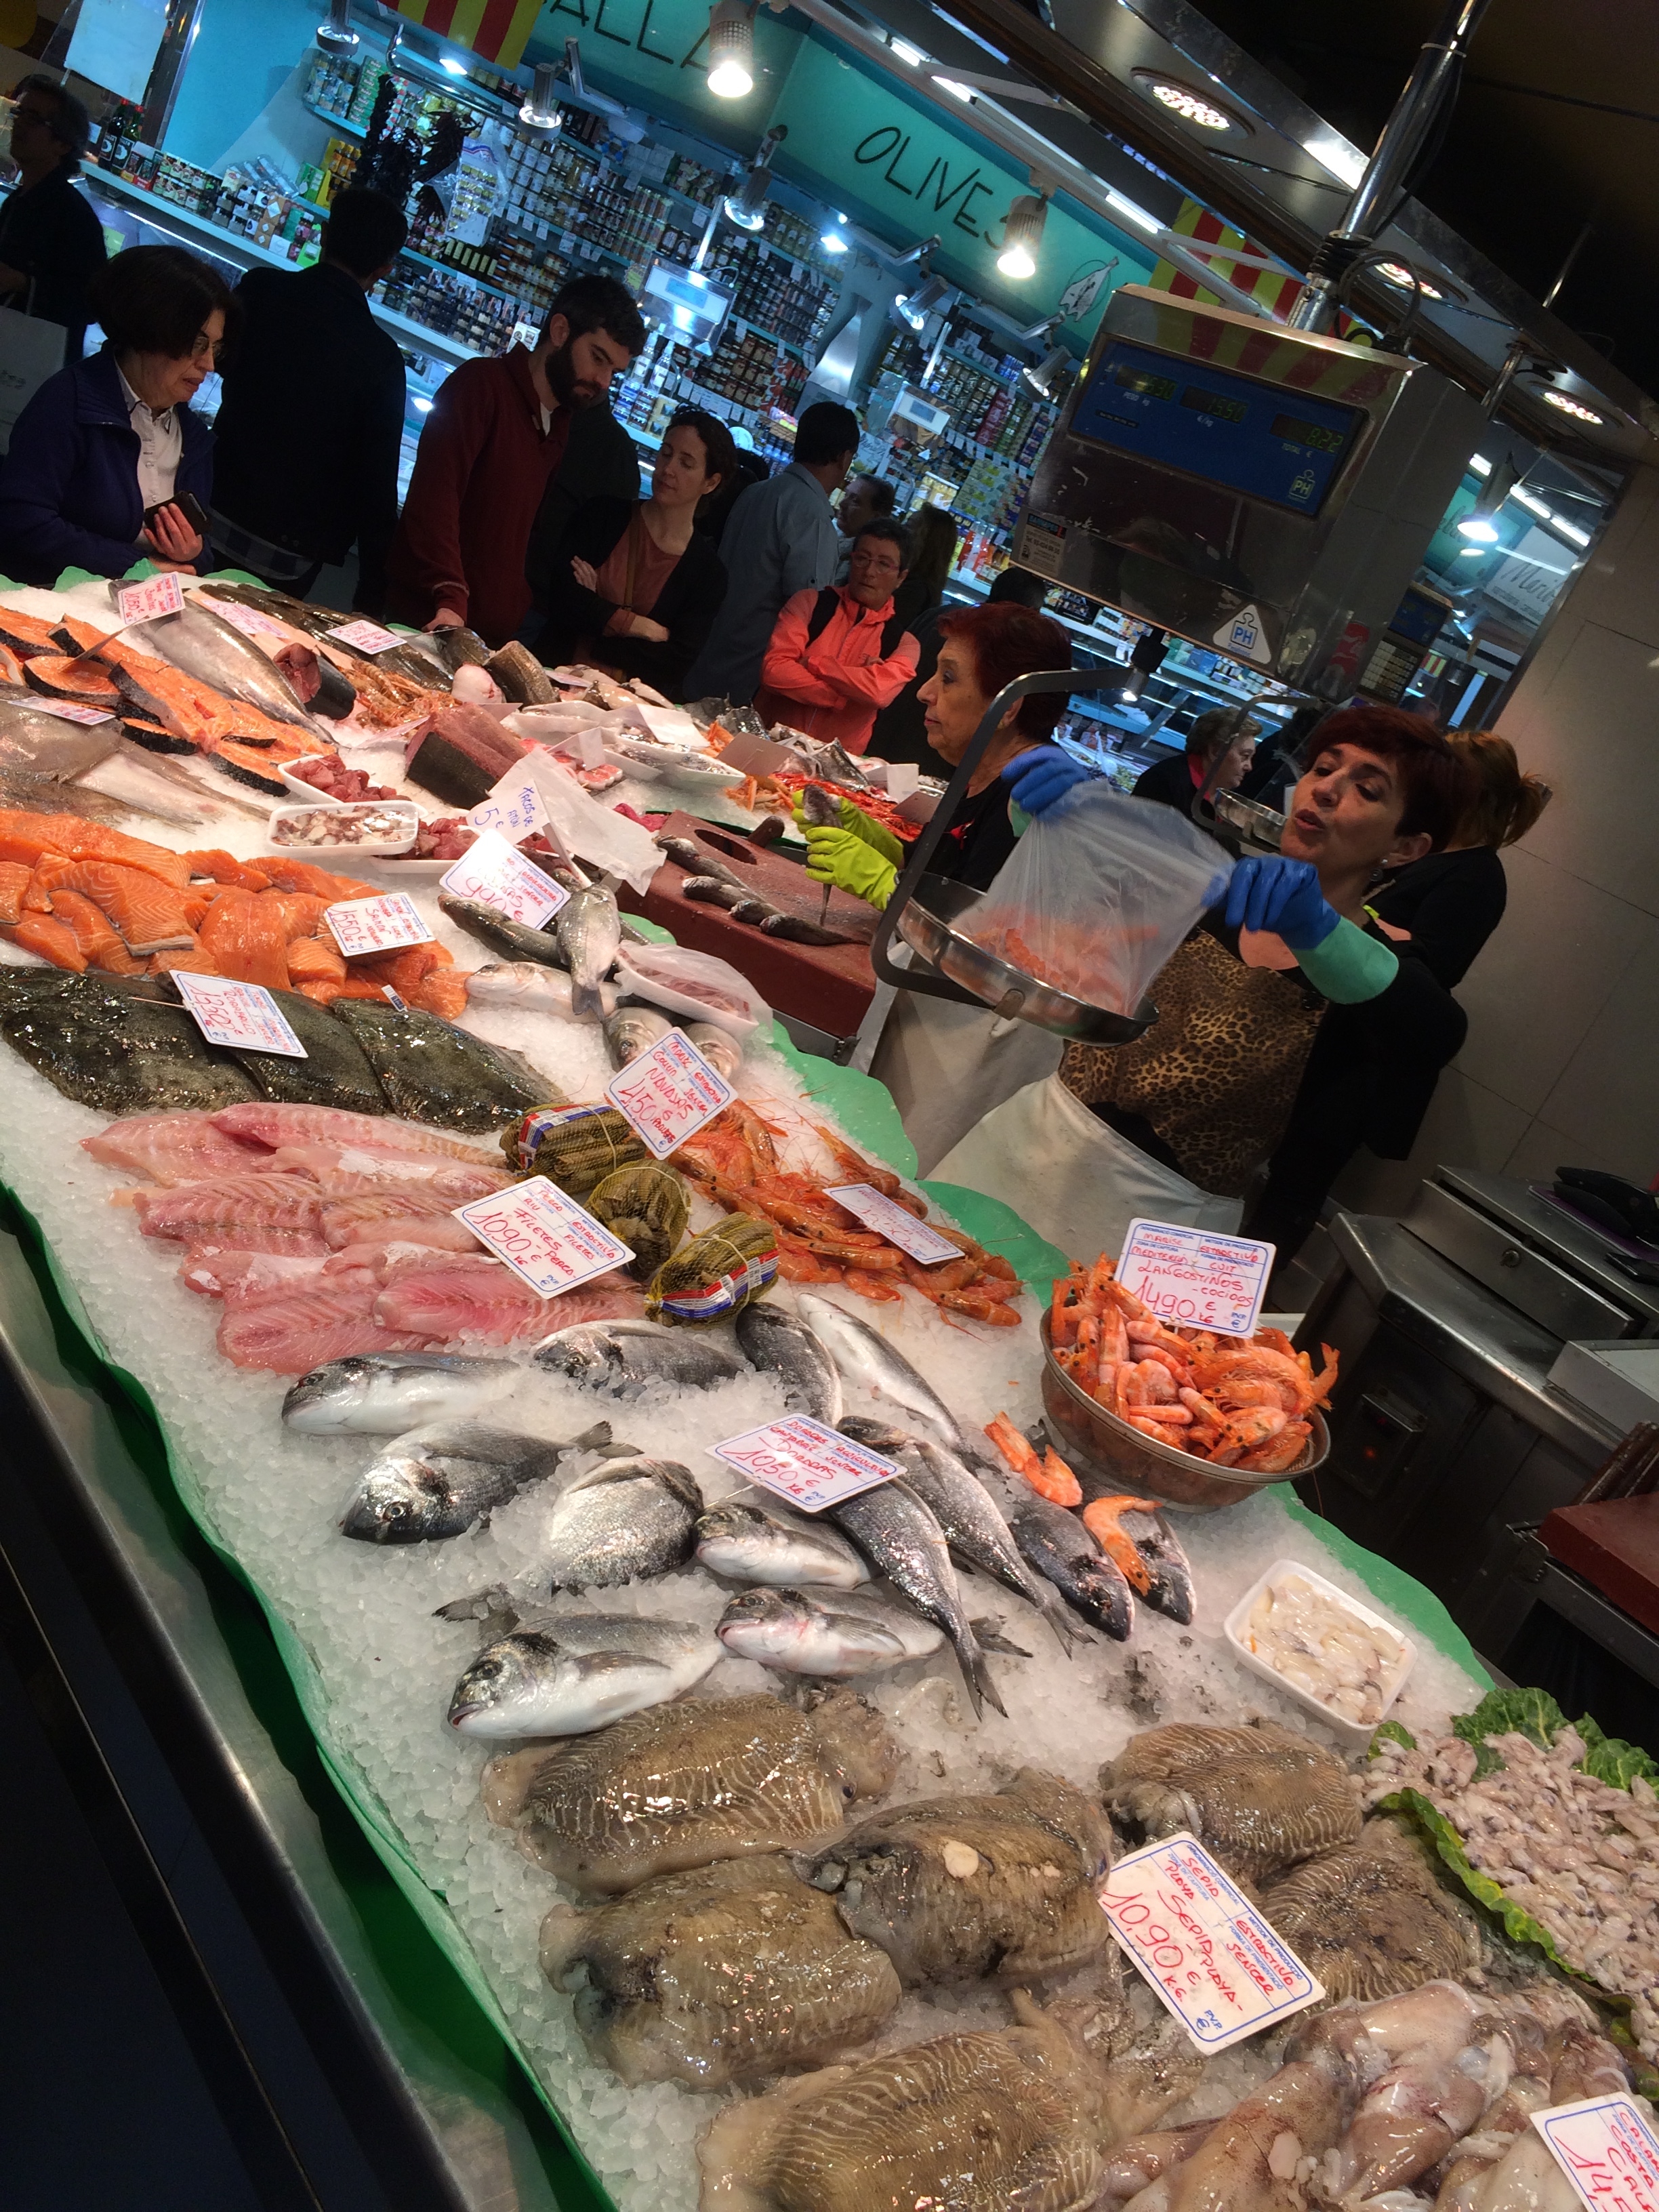 Mercat Santa Caterina - fresh seafood